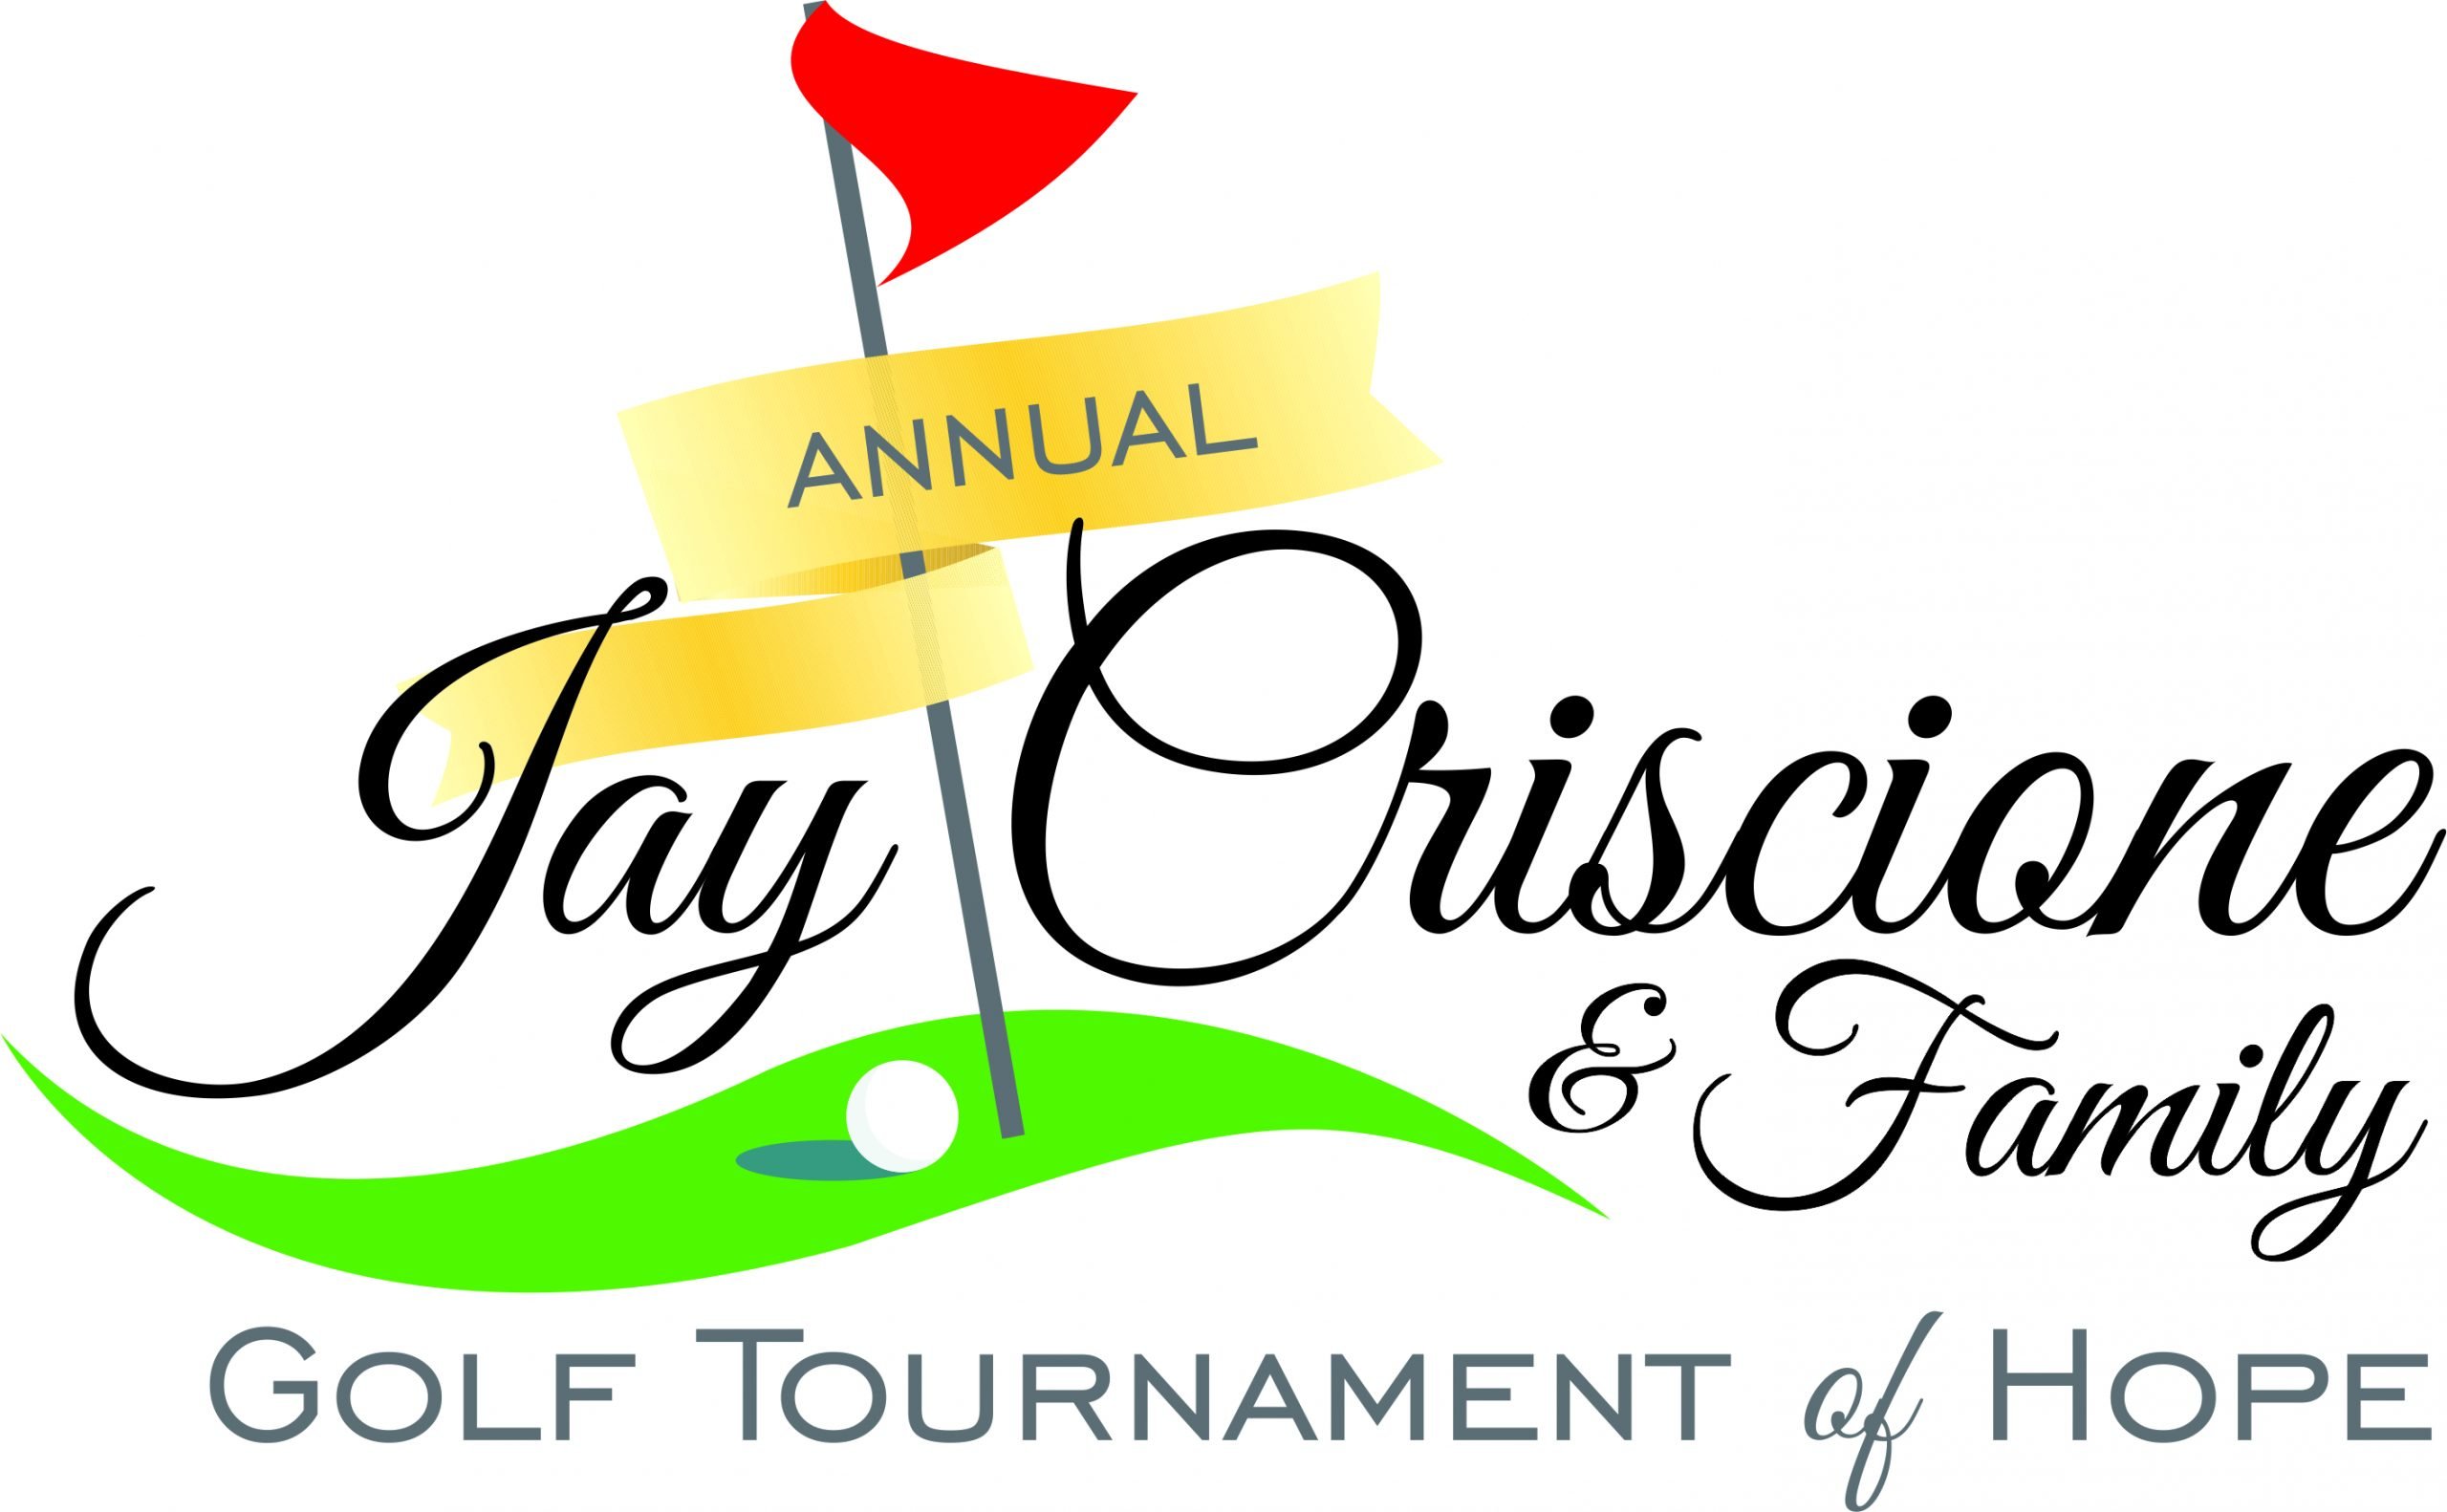 Jay Criscione & Family Golf Tournament of Hope